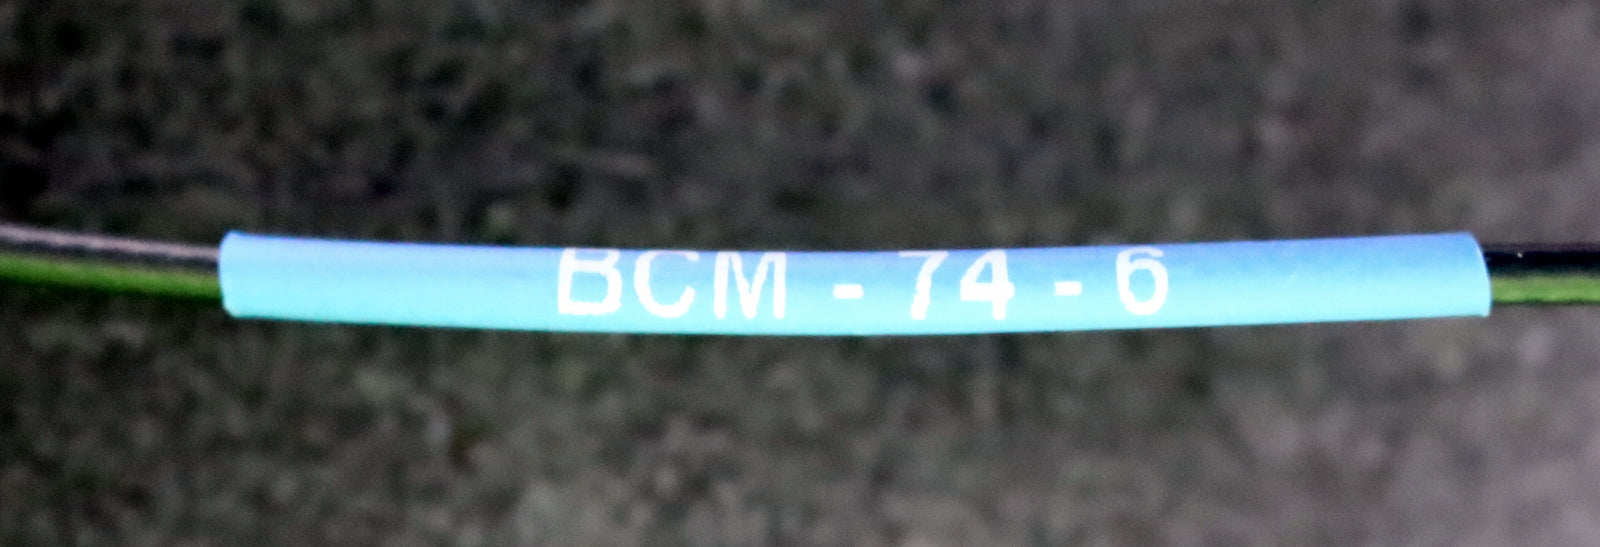 Bild des Artikels OLYMPUS-Ultraschall-Anschlusskabel-BCM-74-6-Panametrics-Nr.-704-231-06-Länge-2m